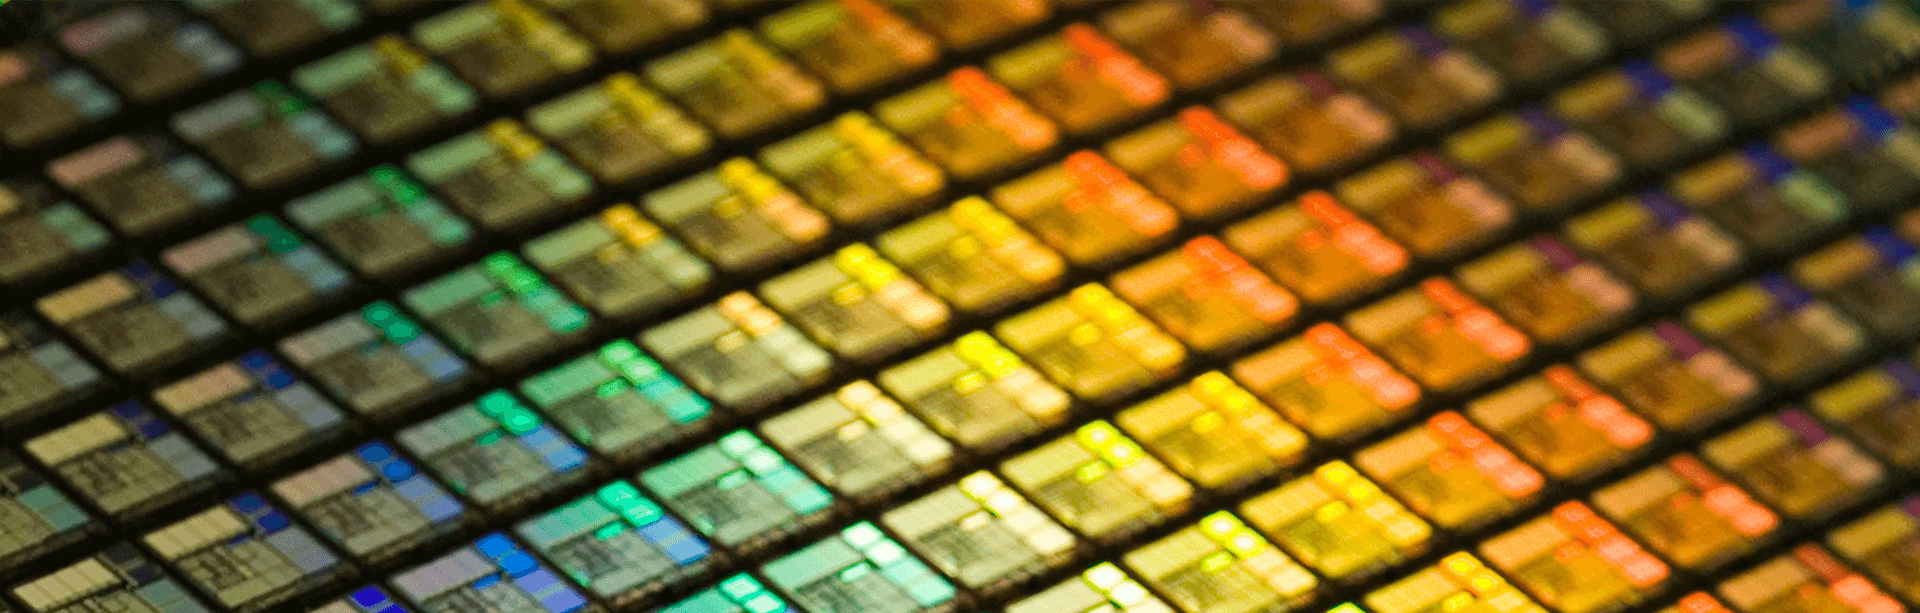 Rainbow colored circuitboard